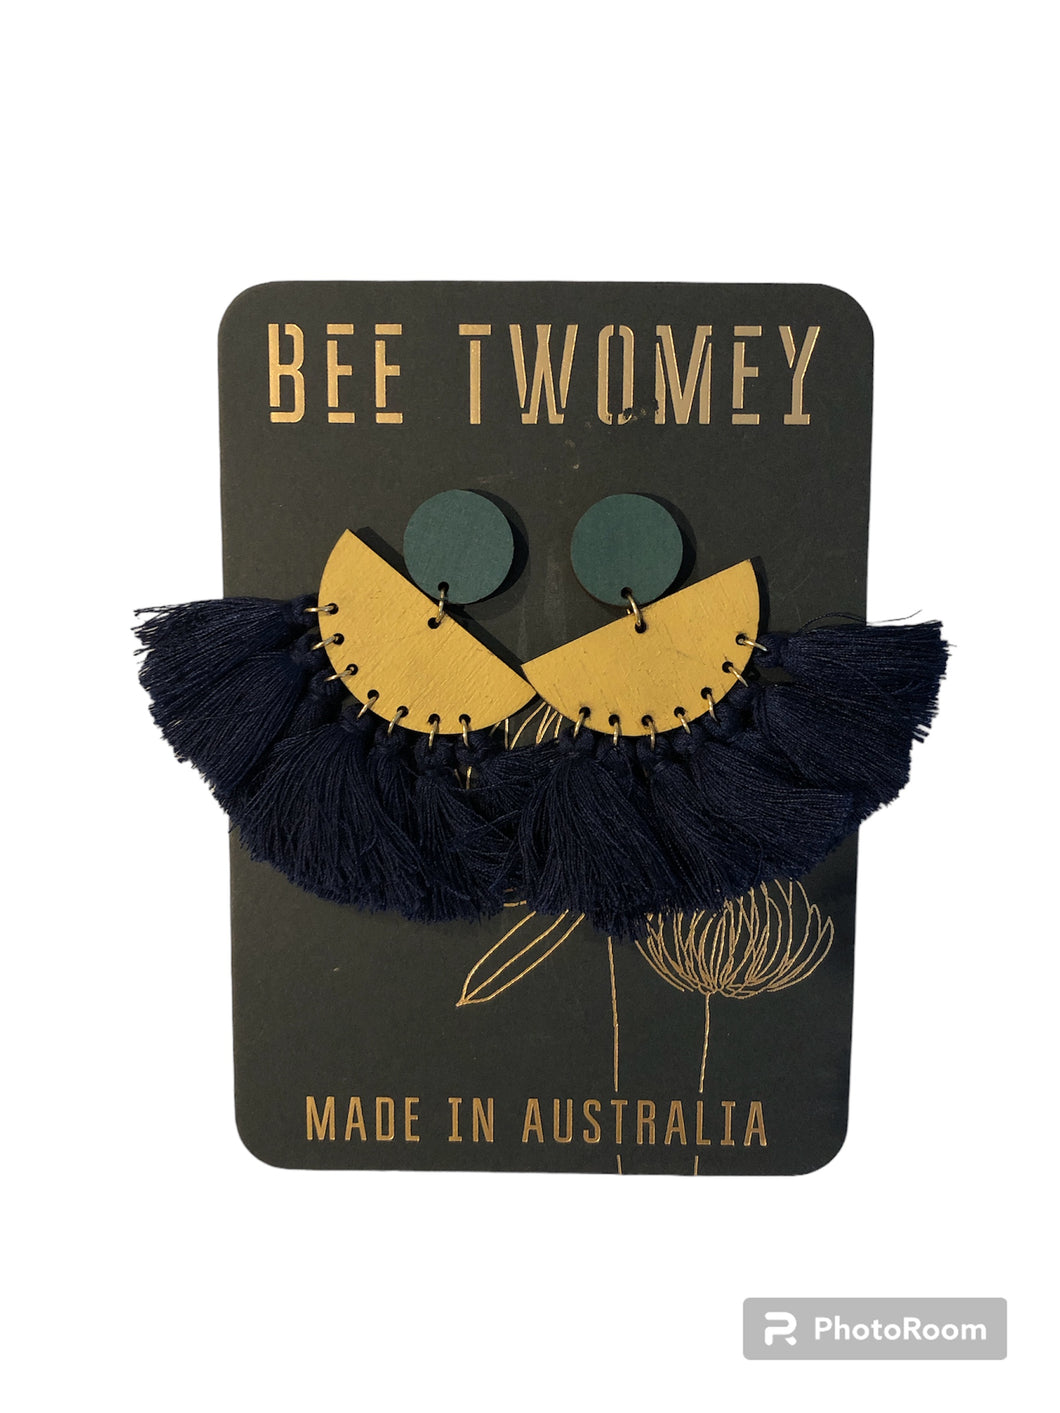 Bee Twomey Drop Earrings - Surgical Steel Posts